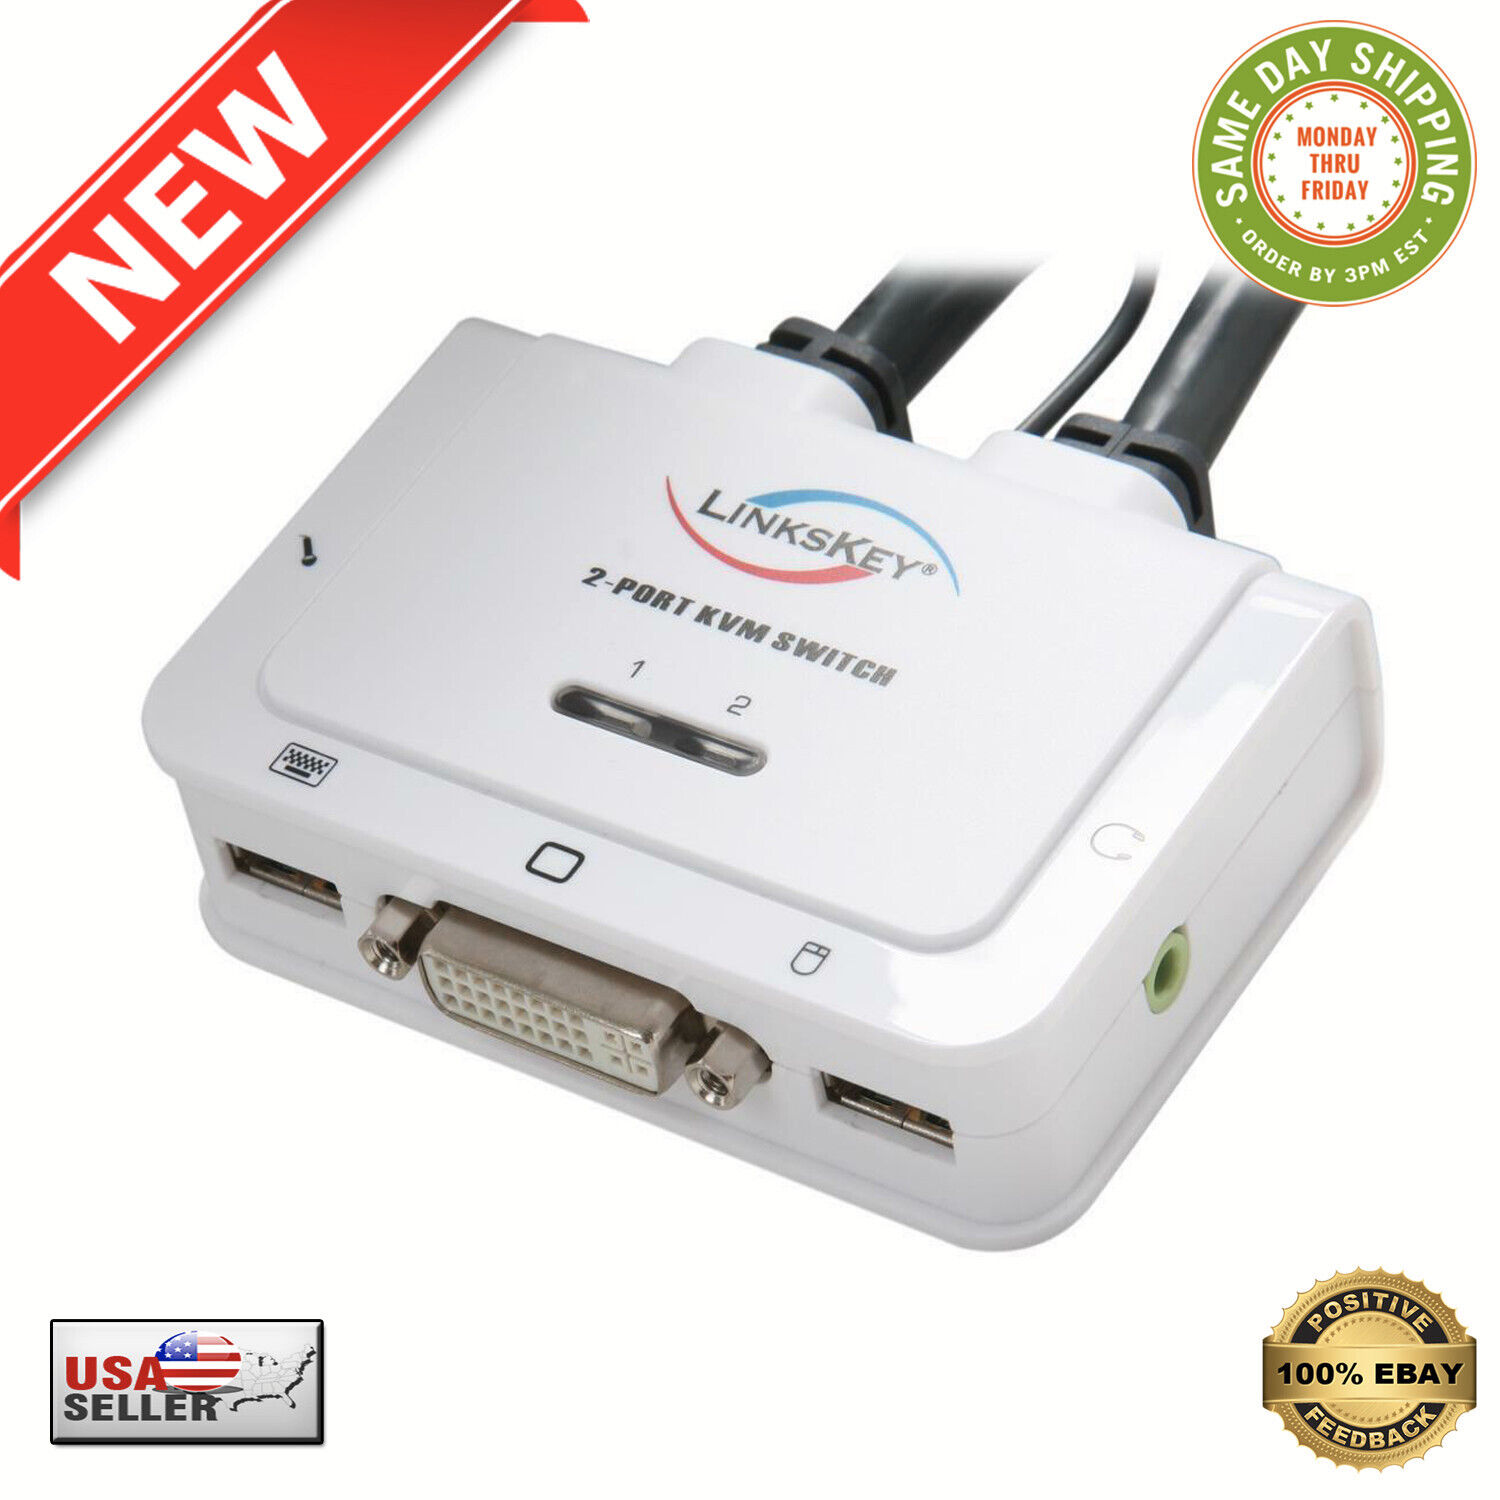 Linkskey LDV-302ARC 2-port DVI USB Audio Mic KVM Switch w/ Quick-Switch Button